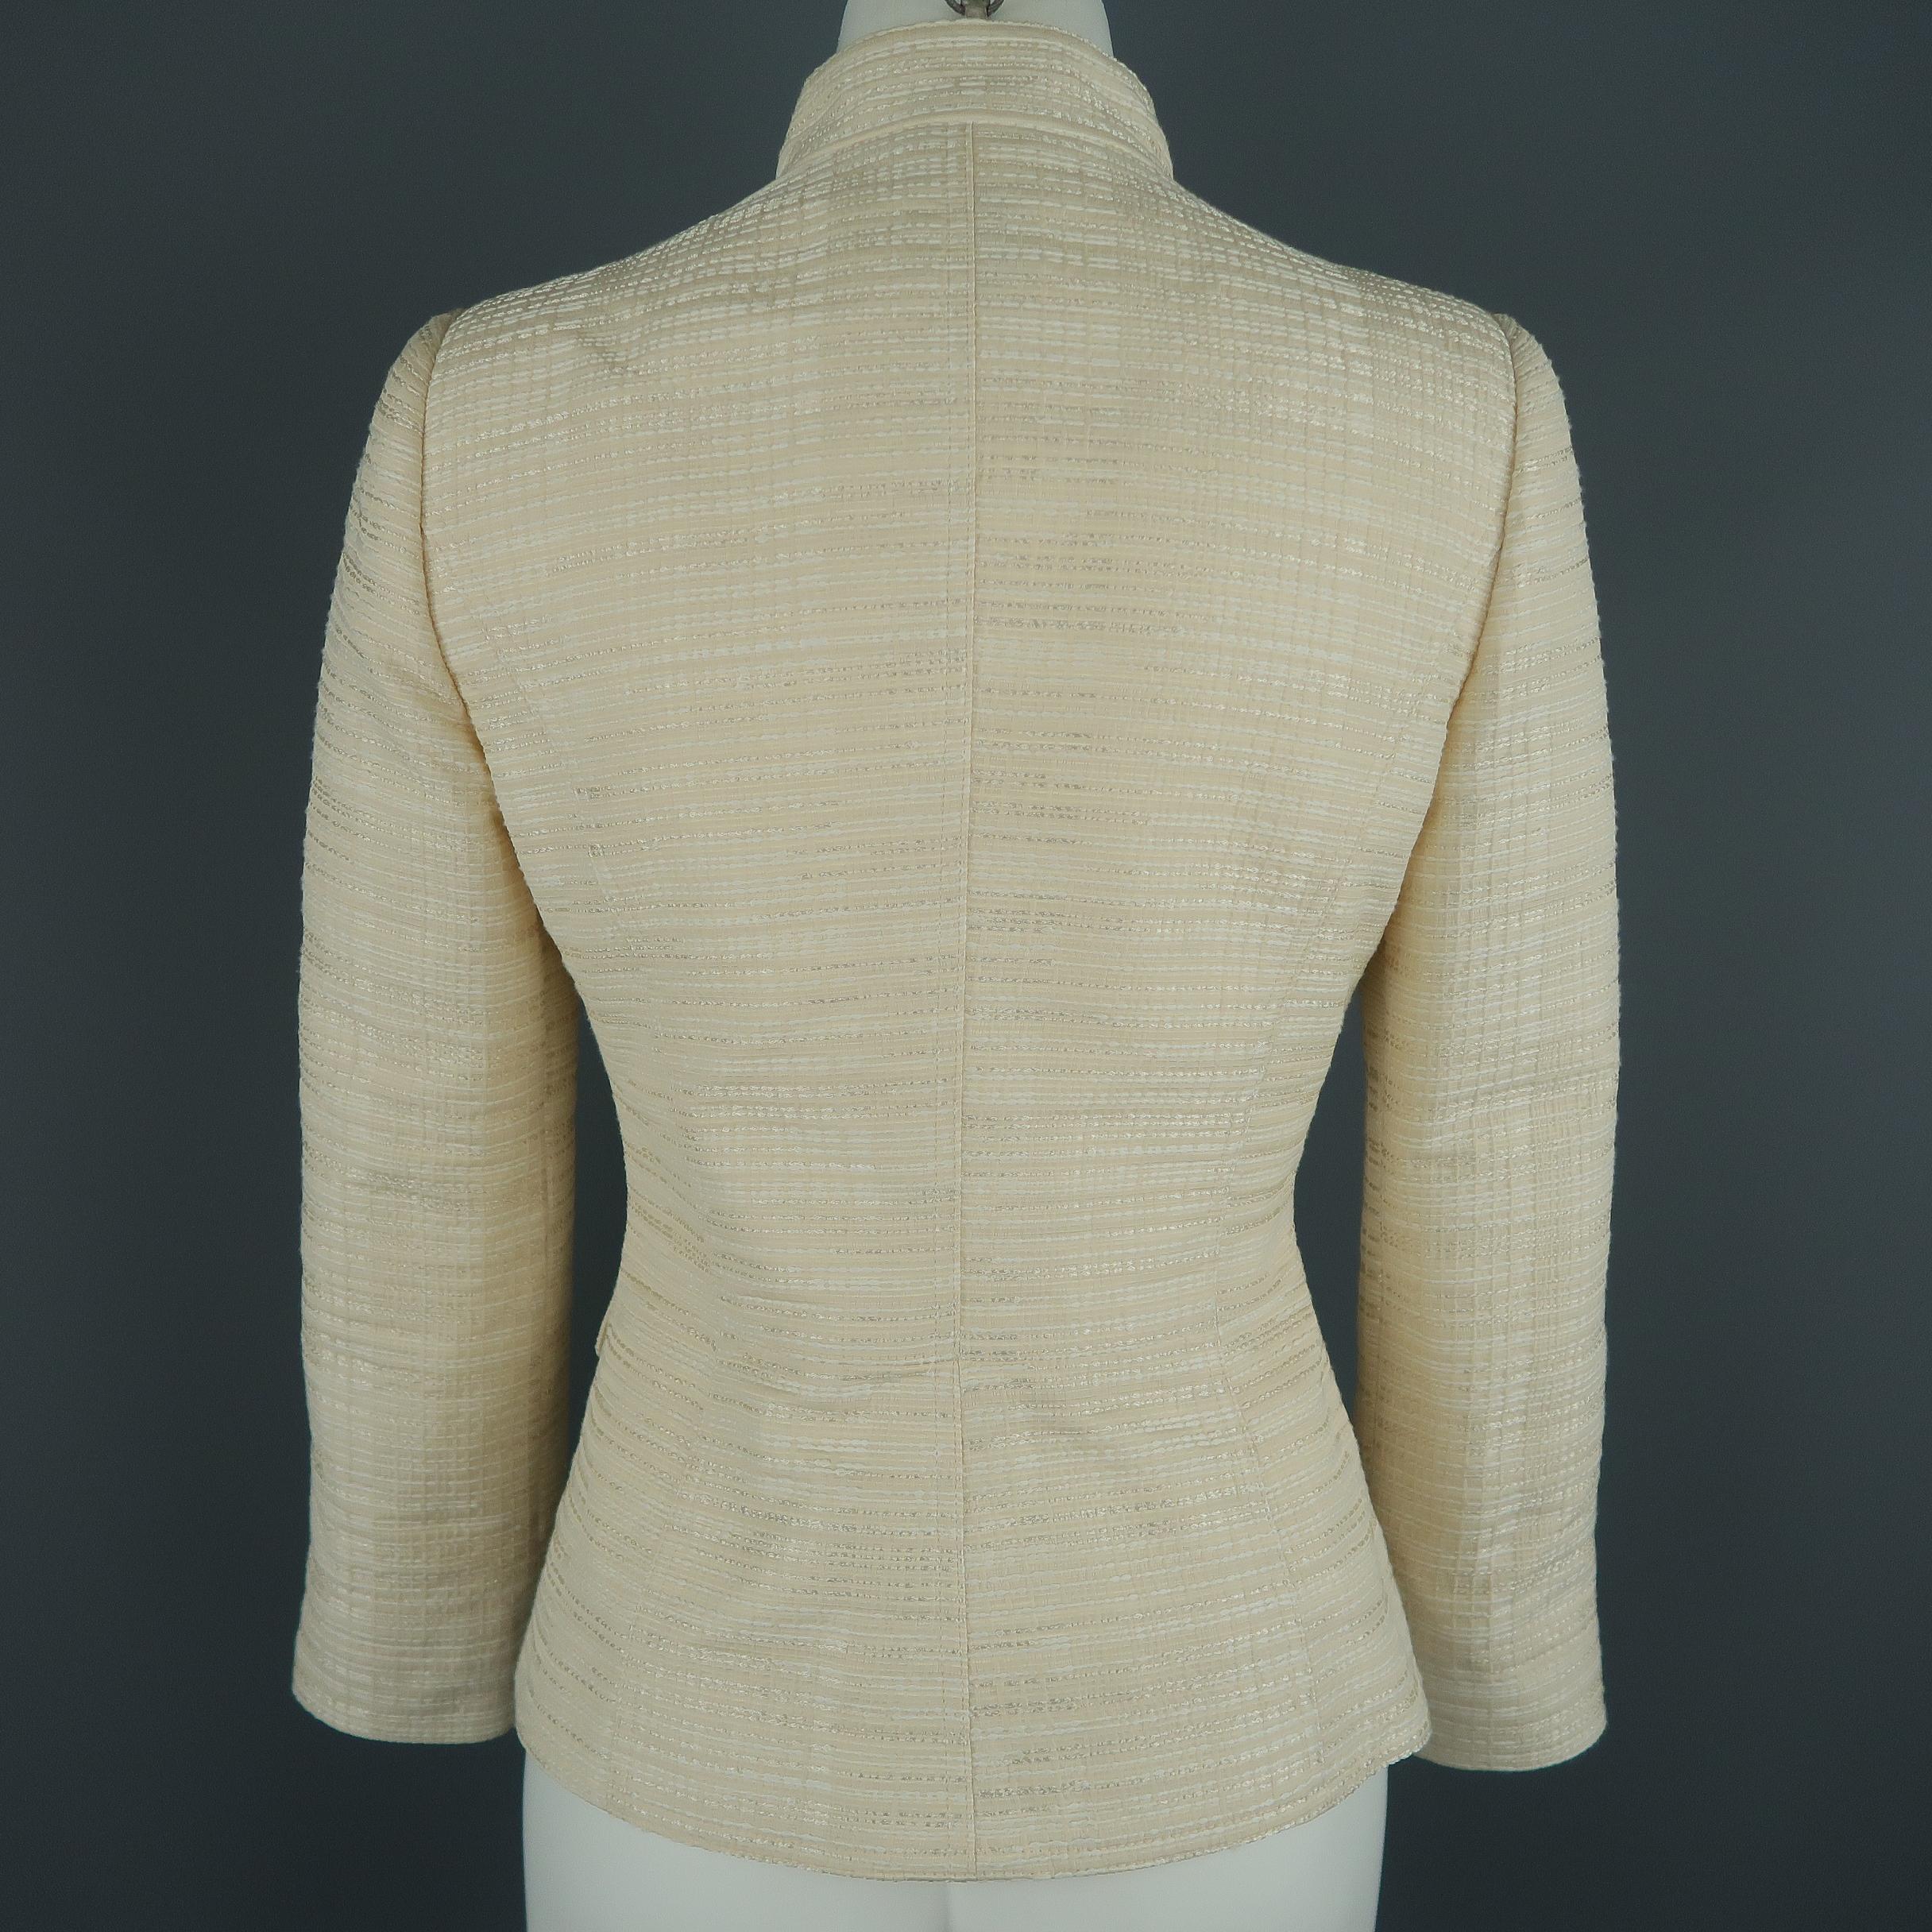 Beige ARMANI COLLEZIONI Size 6 Cream Textured Cotton Blend Mandarin Collar Jacket